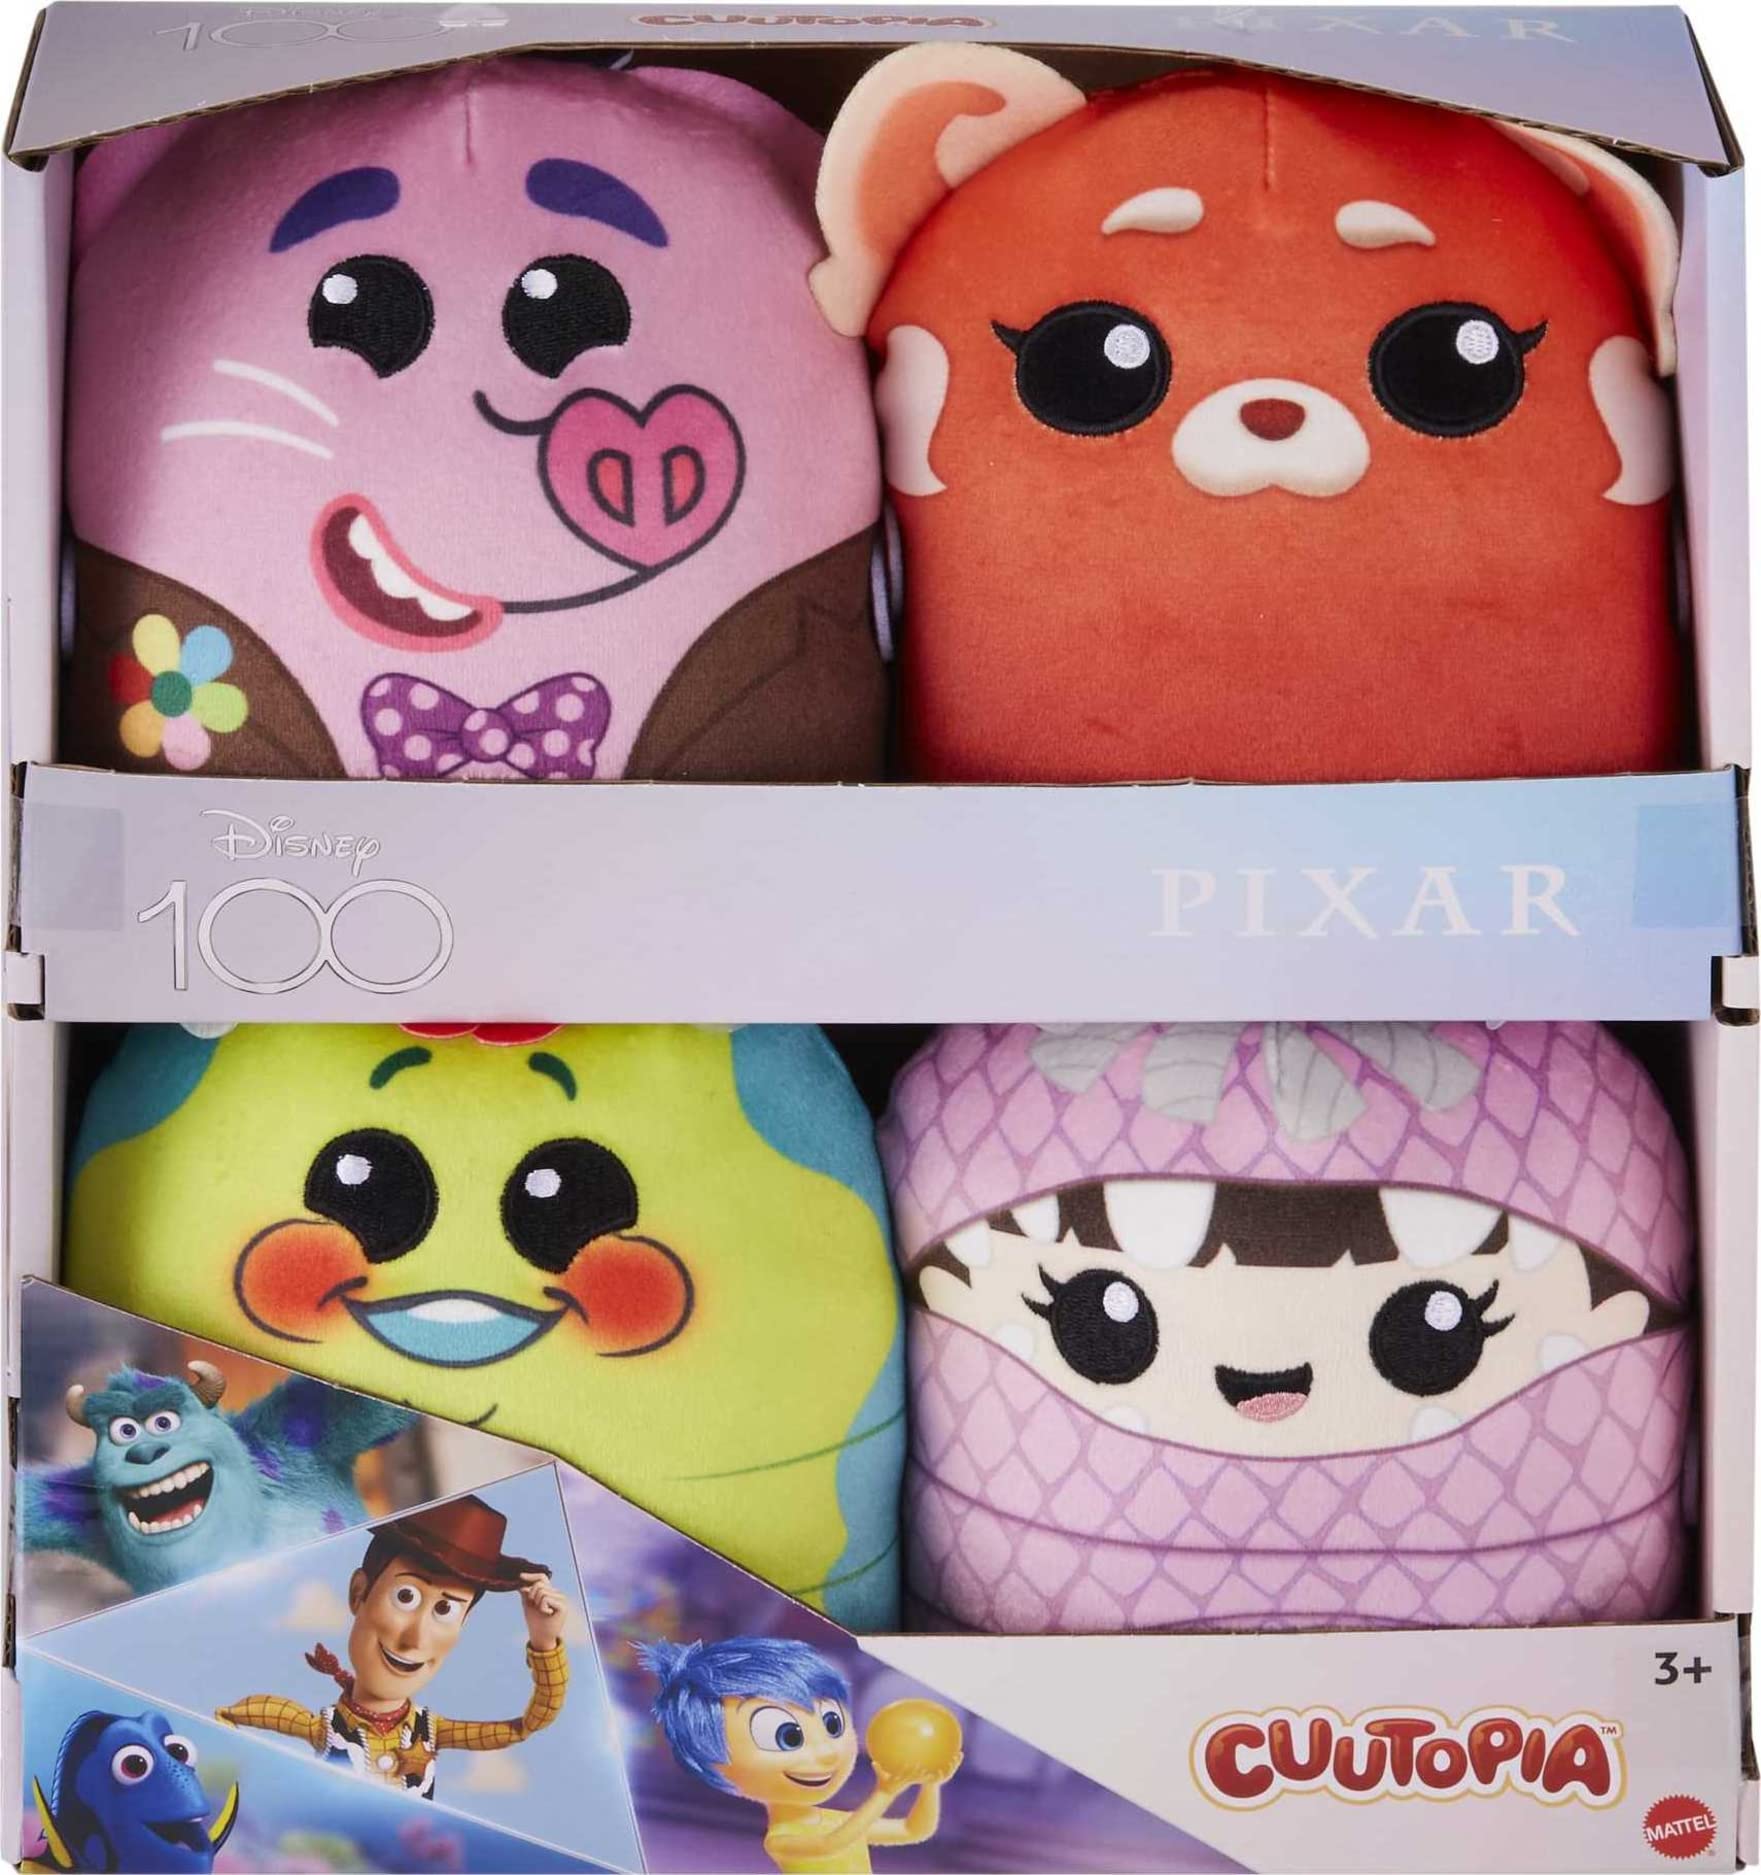 4-Pack Mattel Disney100 Pixar Pals 5" Cuutopia Plush Toys $7 + Free Shipping w/ Prime or on $35+